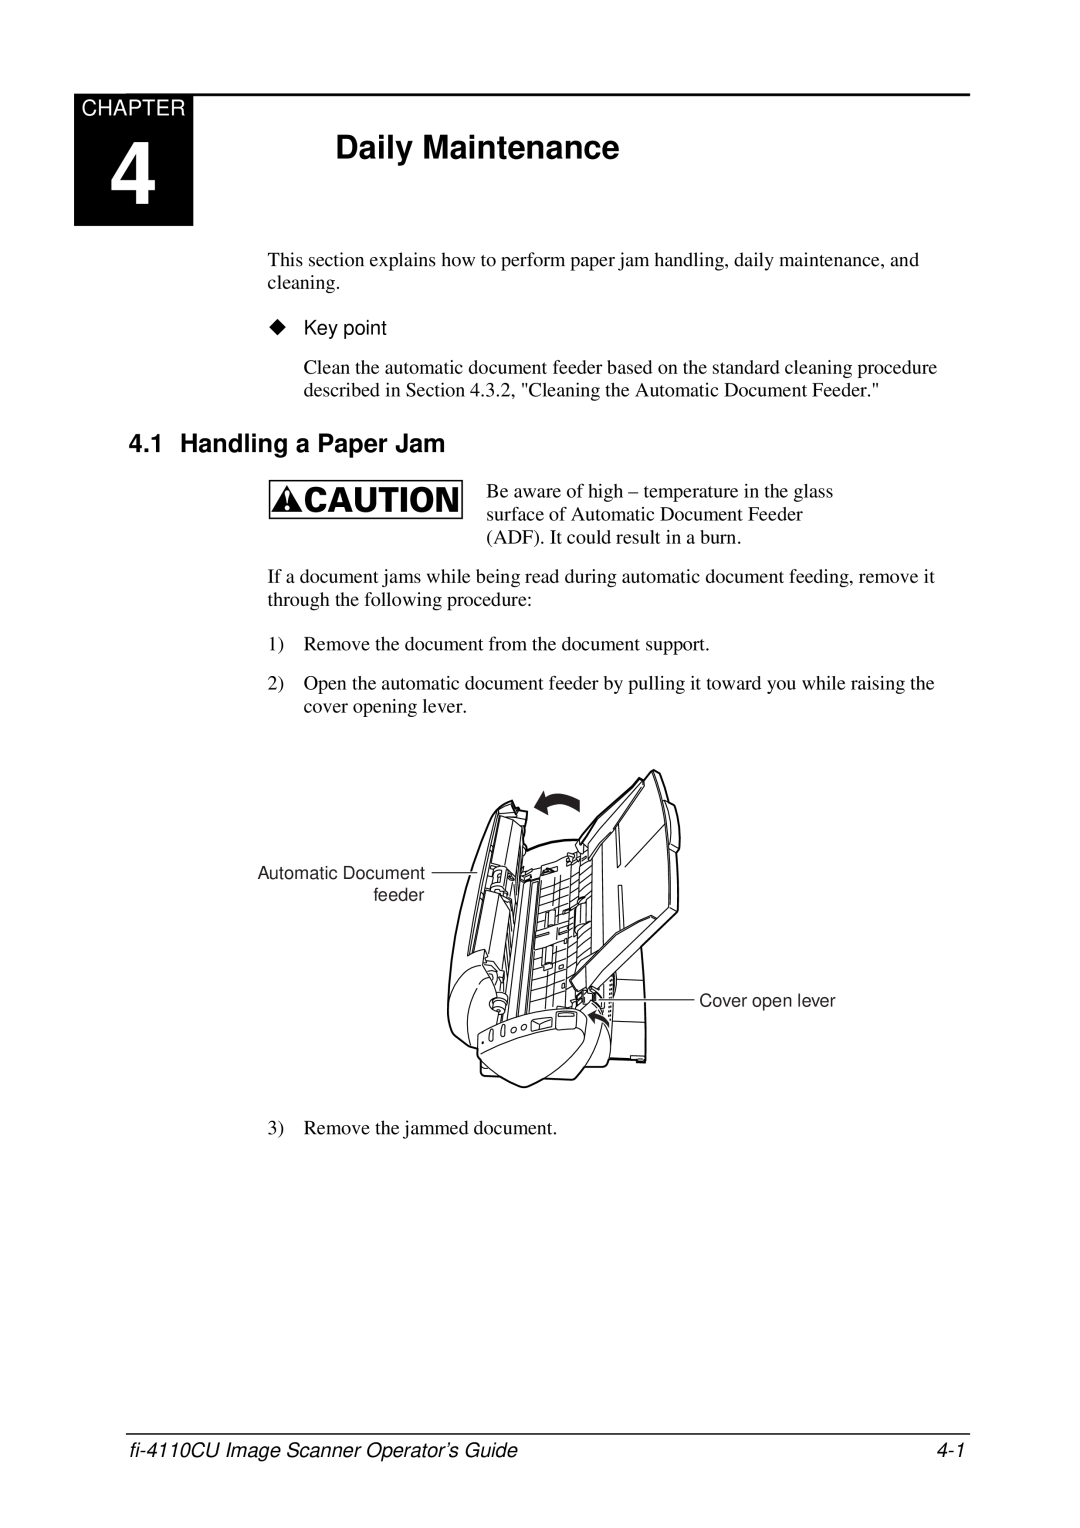 Fujitsu C150-E194-01EN manual Daily Maintenance, Handling a Paper Jam, Chapter, fi-4110CU Image Scanner Operator’s Guide 